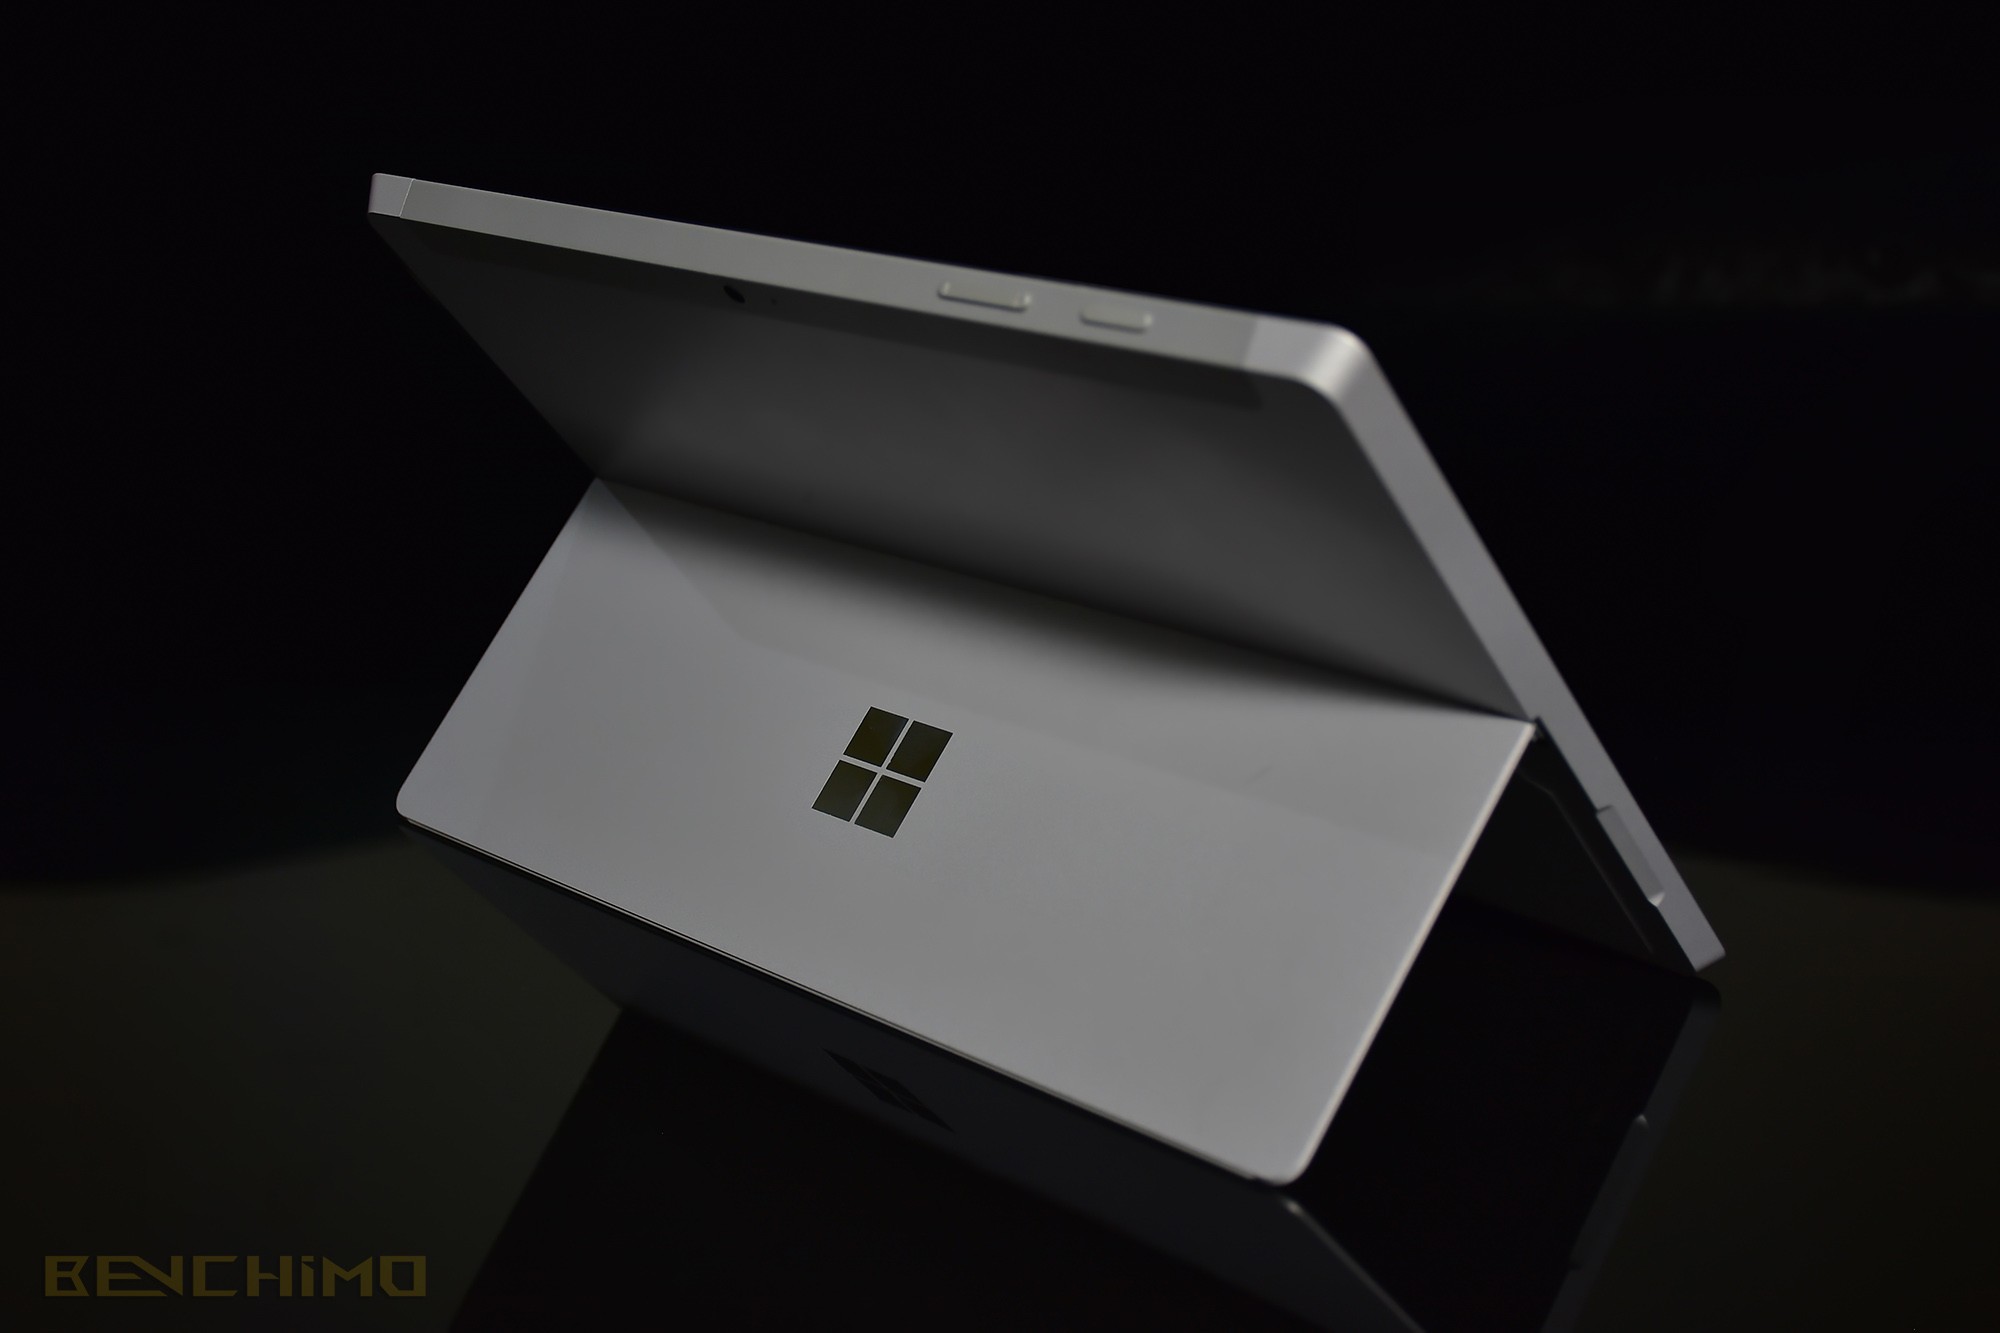 Microsoft Surface-benchimo / بروزرسانی ویندوز 10